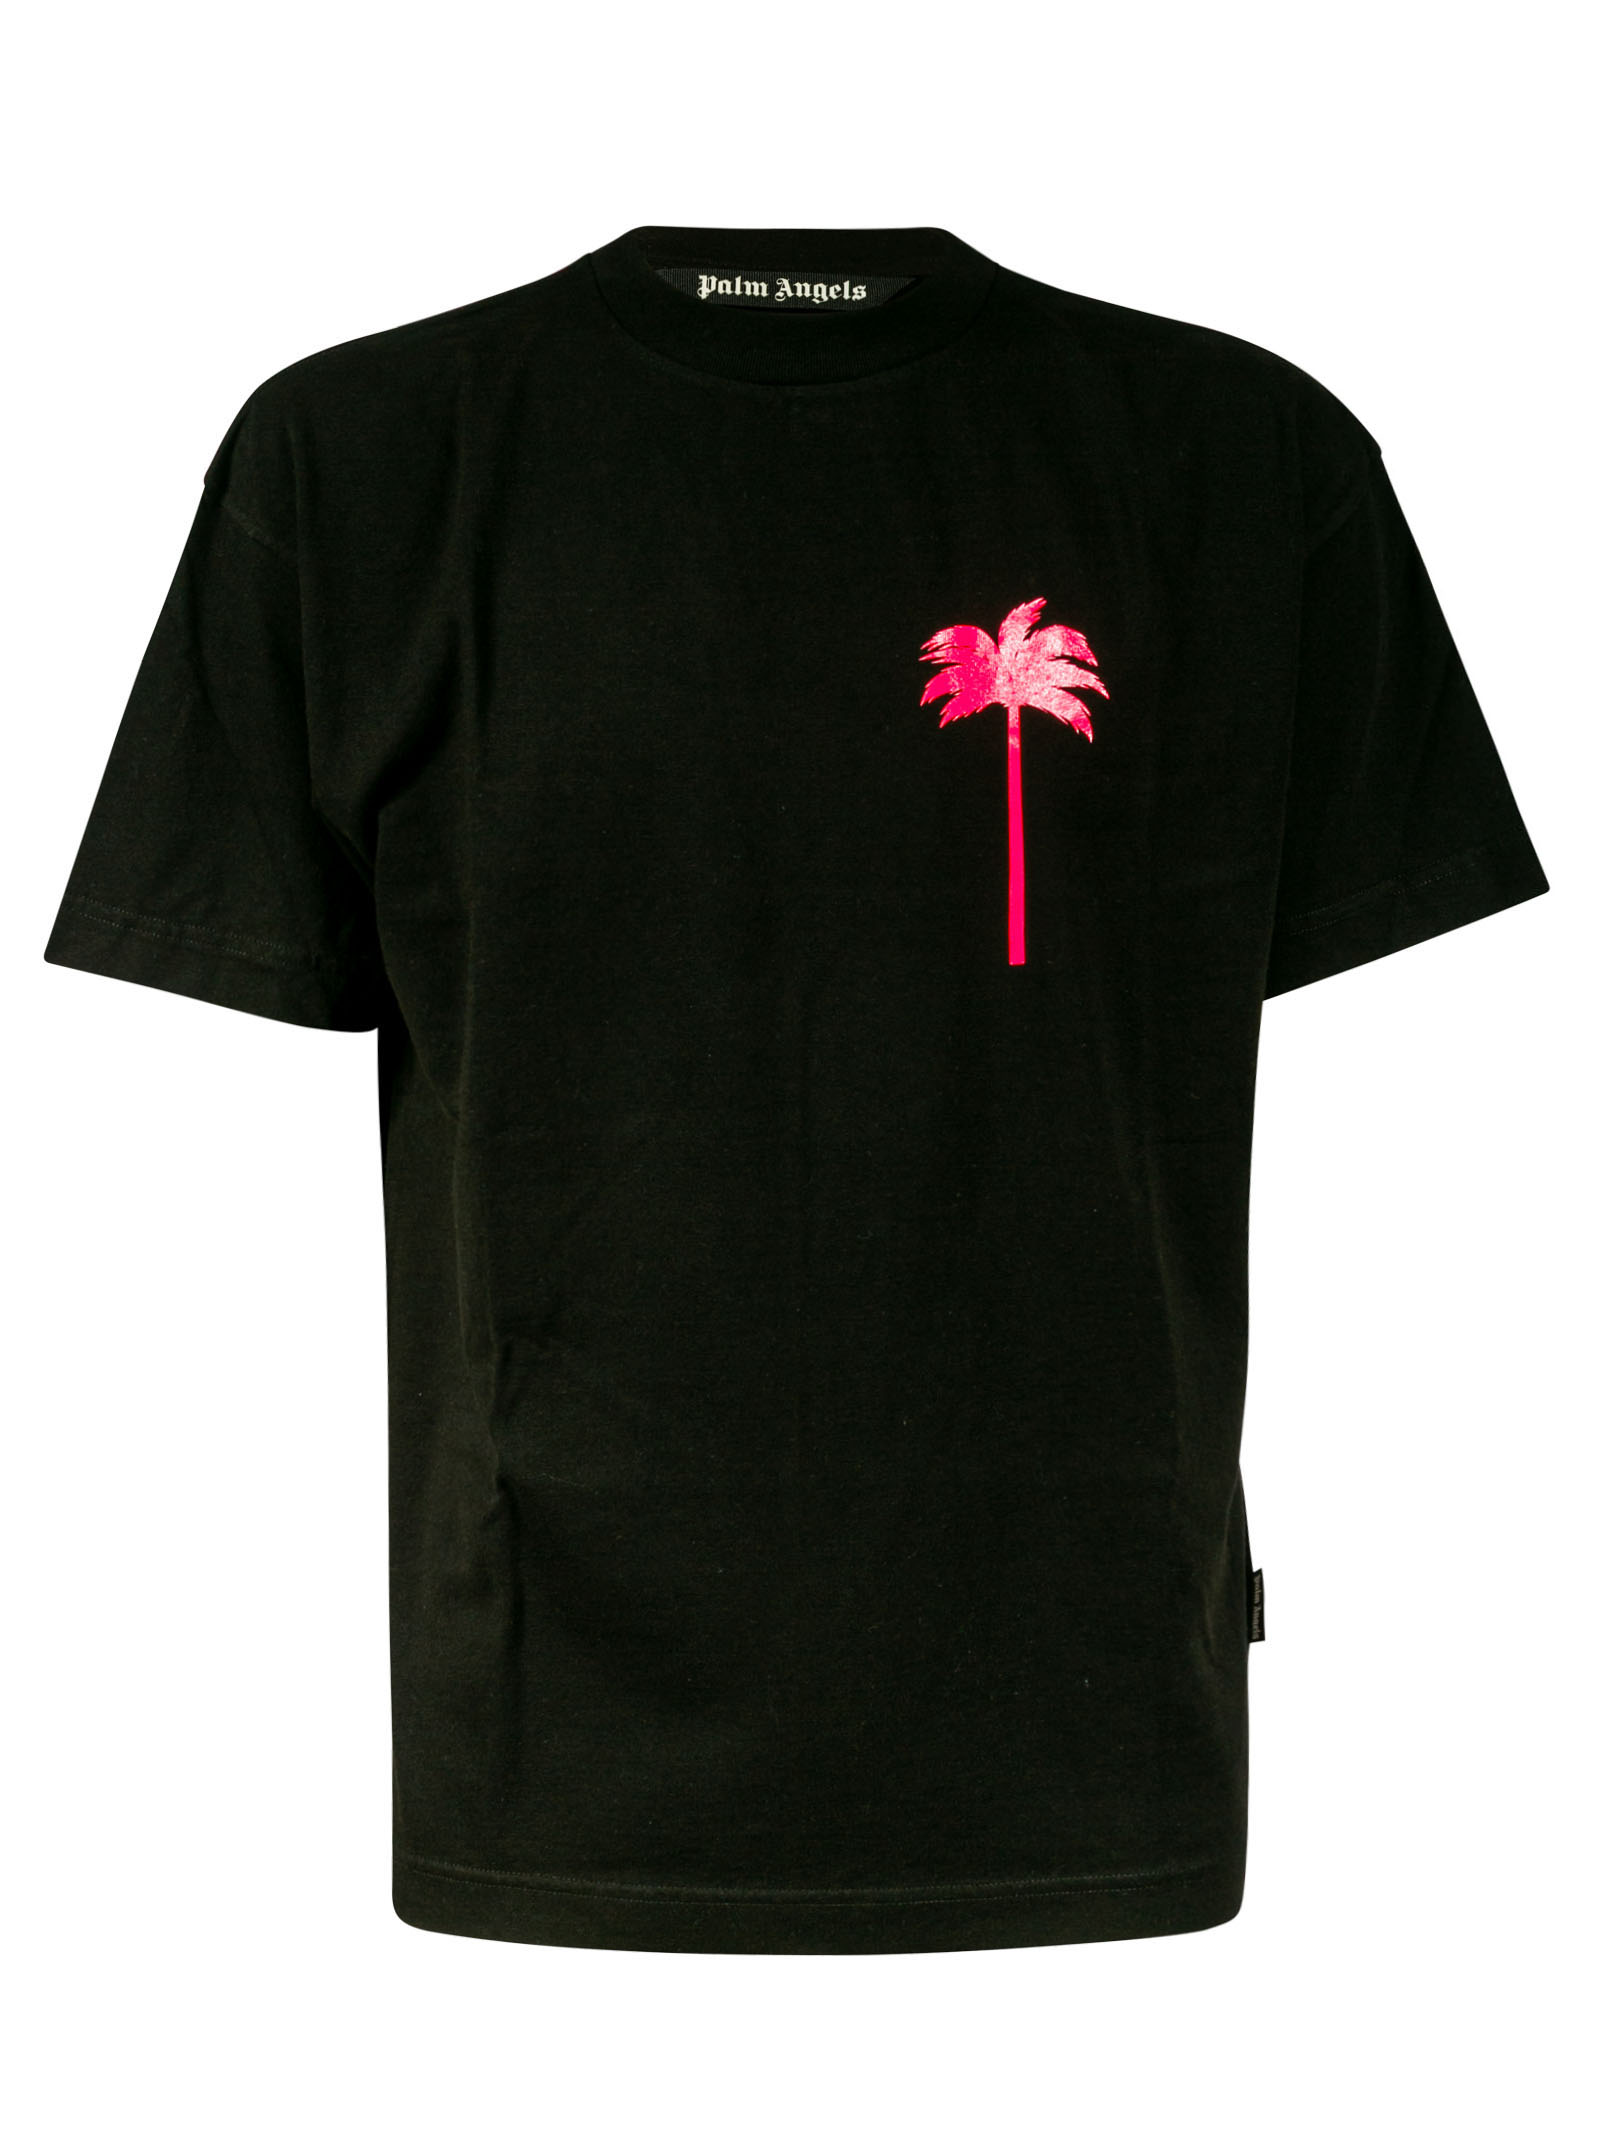 Saint Laurent Pxp Classic T-shirt In Black/fuchsia